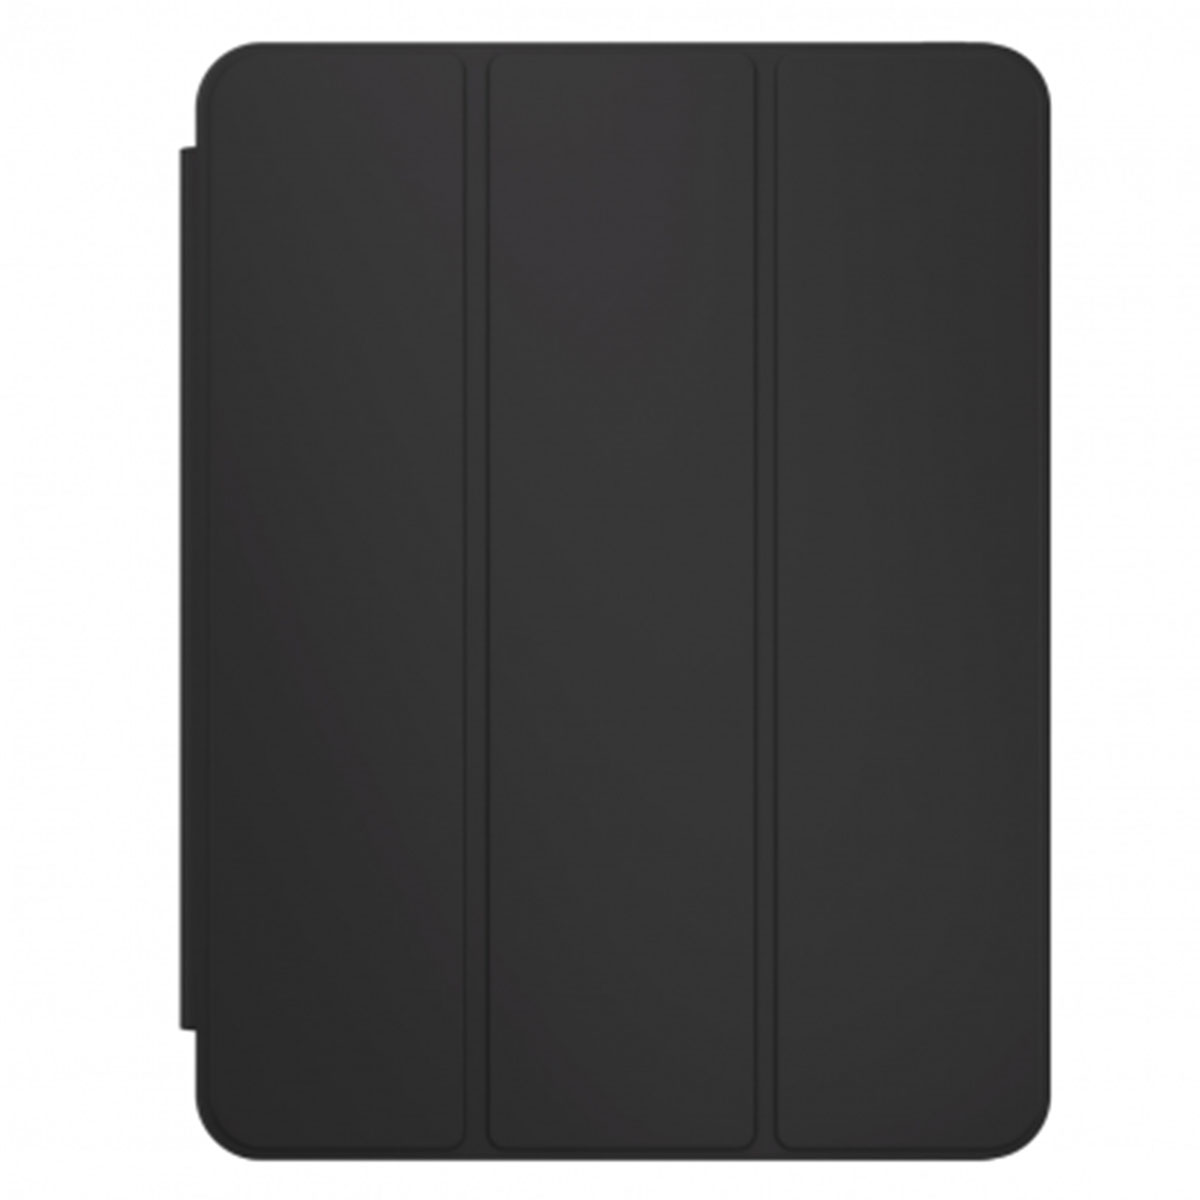 Husa de protectie tableta Next One pentru Apple iPad 11 inch, Suport Pen, Protectie 360, Plastic si microfiba interior, Black